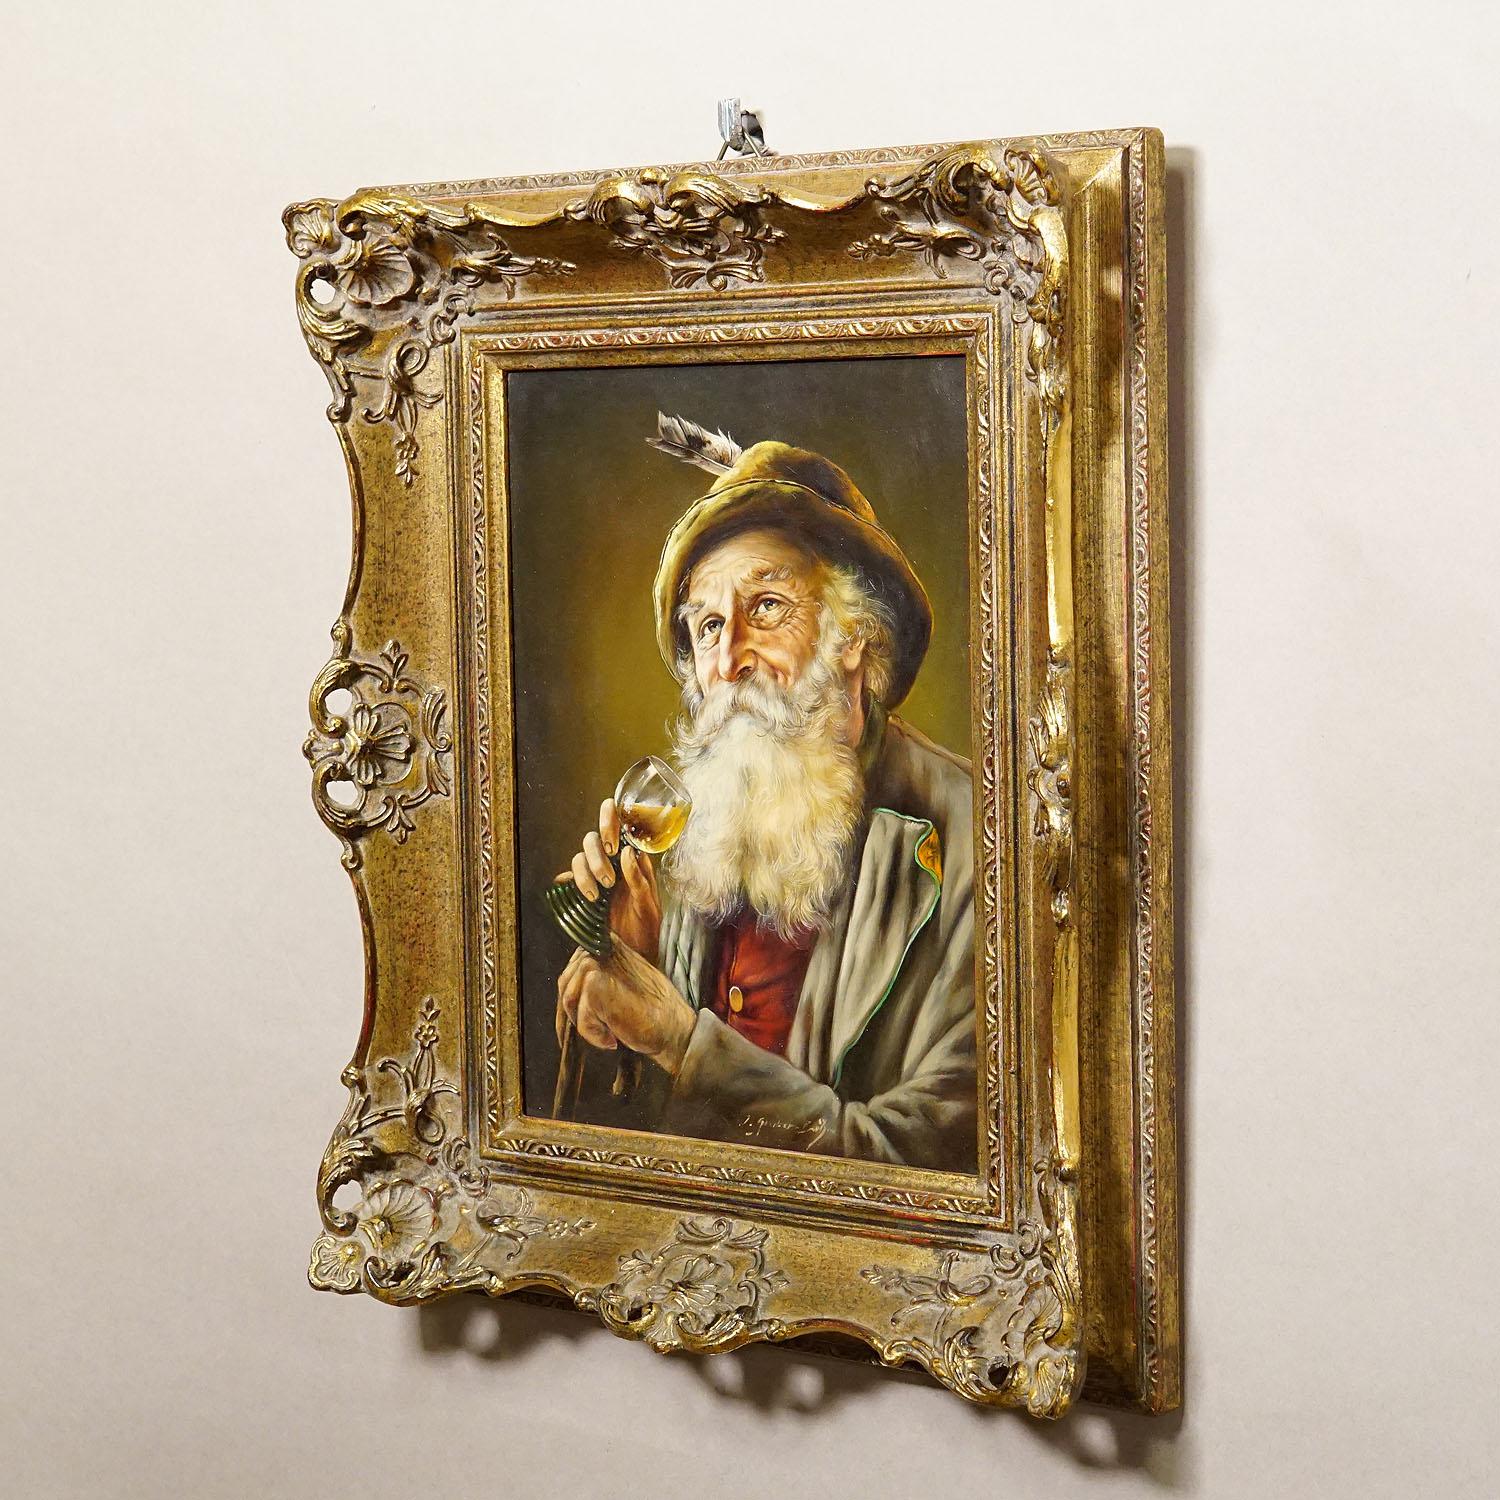 Folk Art J. Gruber - Portrait of a Bavarian Folksy Man with Wine Glass, Oil on Wood For Sale